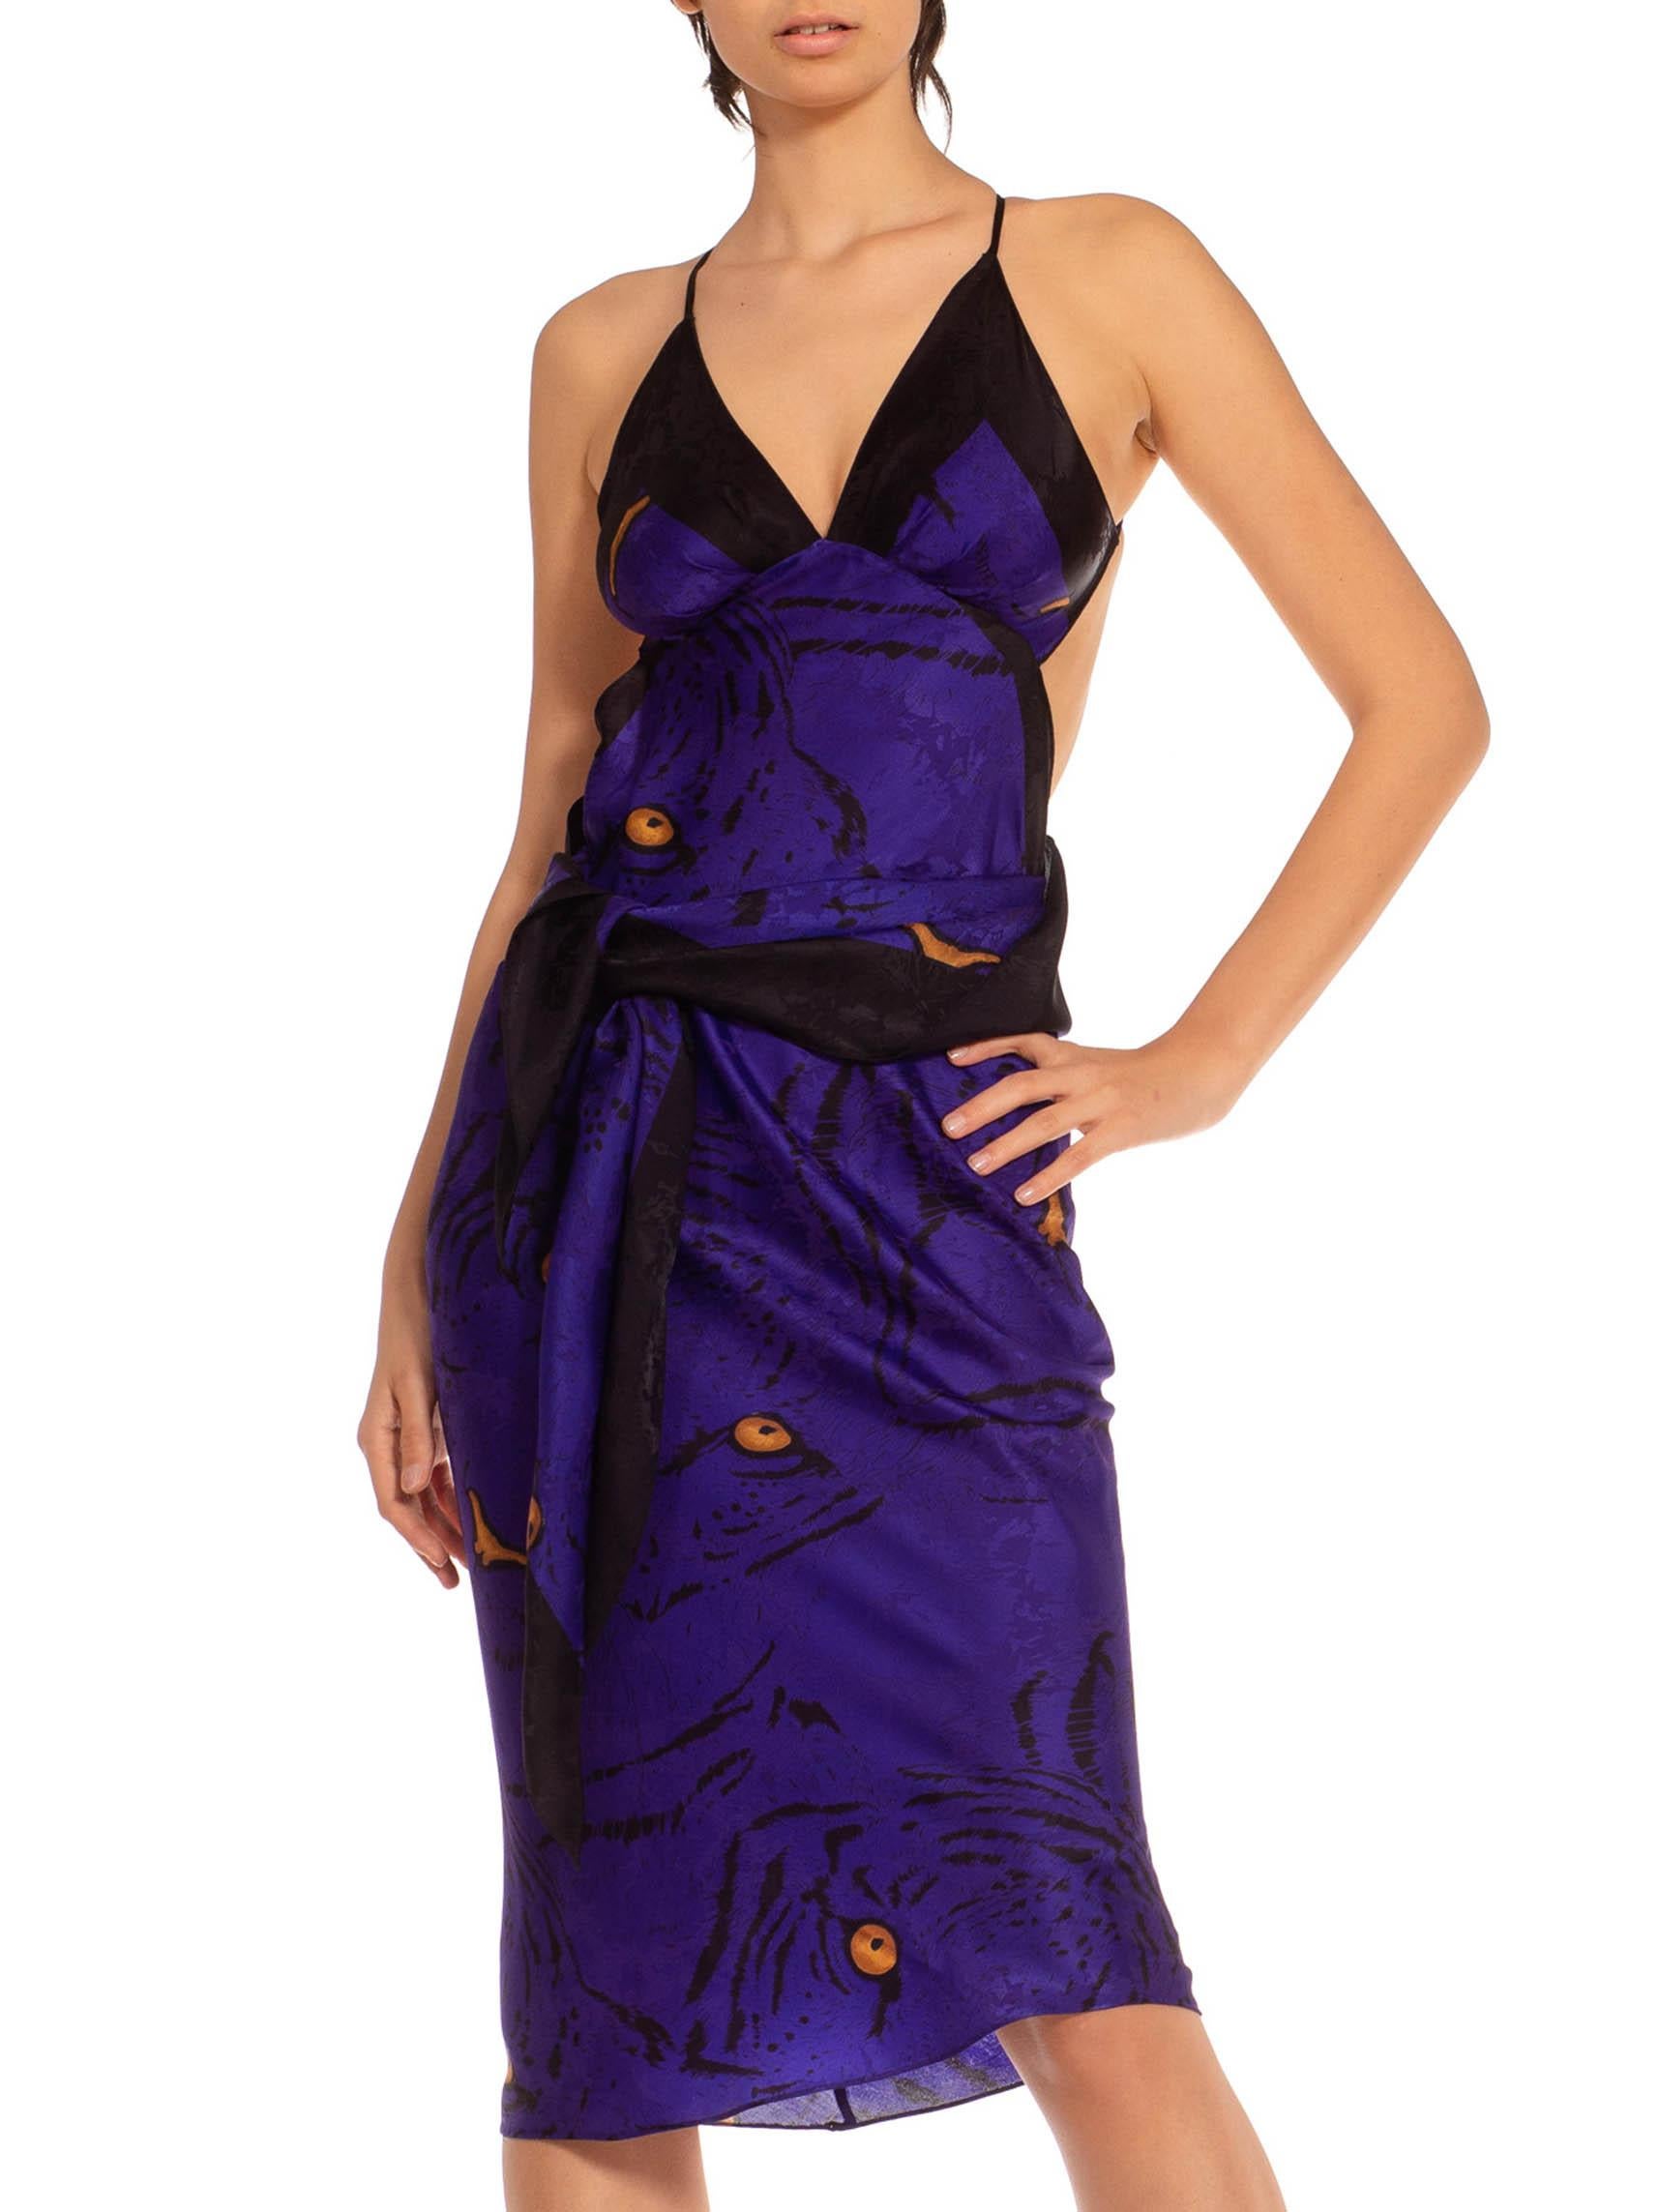 MORPHEW COLLECTION Purple & Yellow Silk Twill Sagittarius Scarf Dress Made From 2